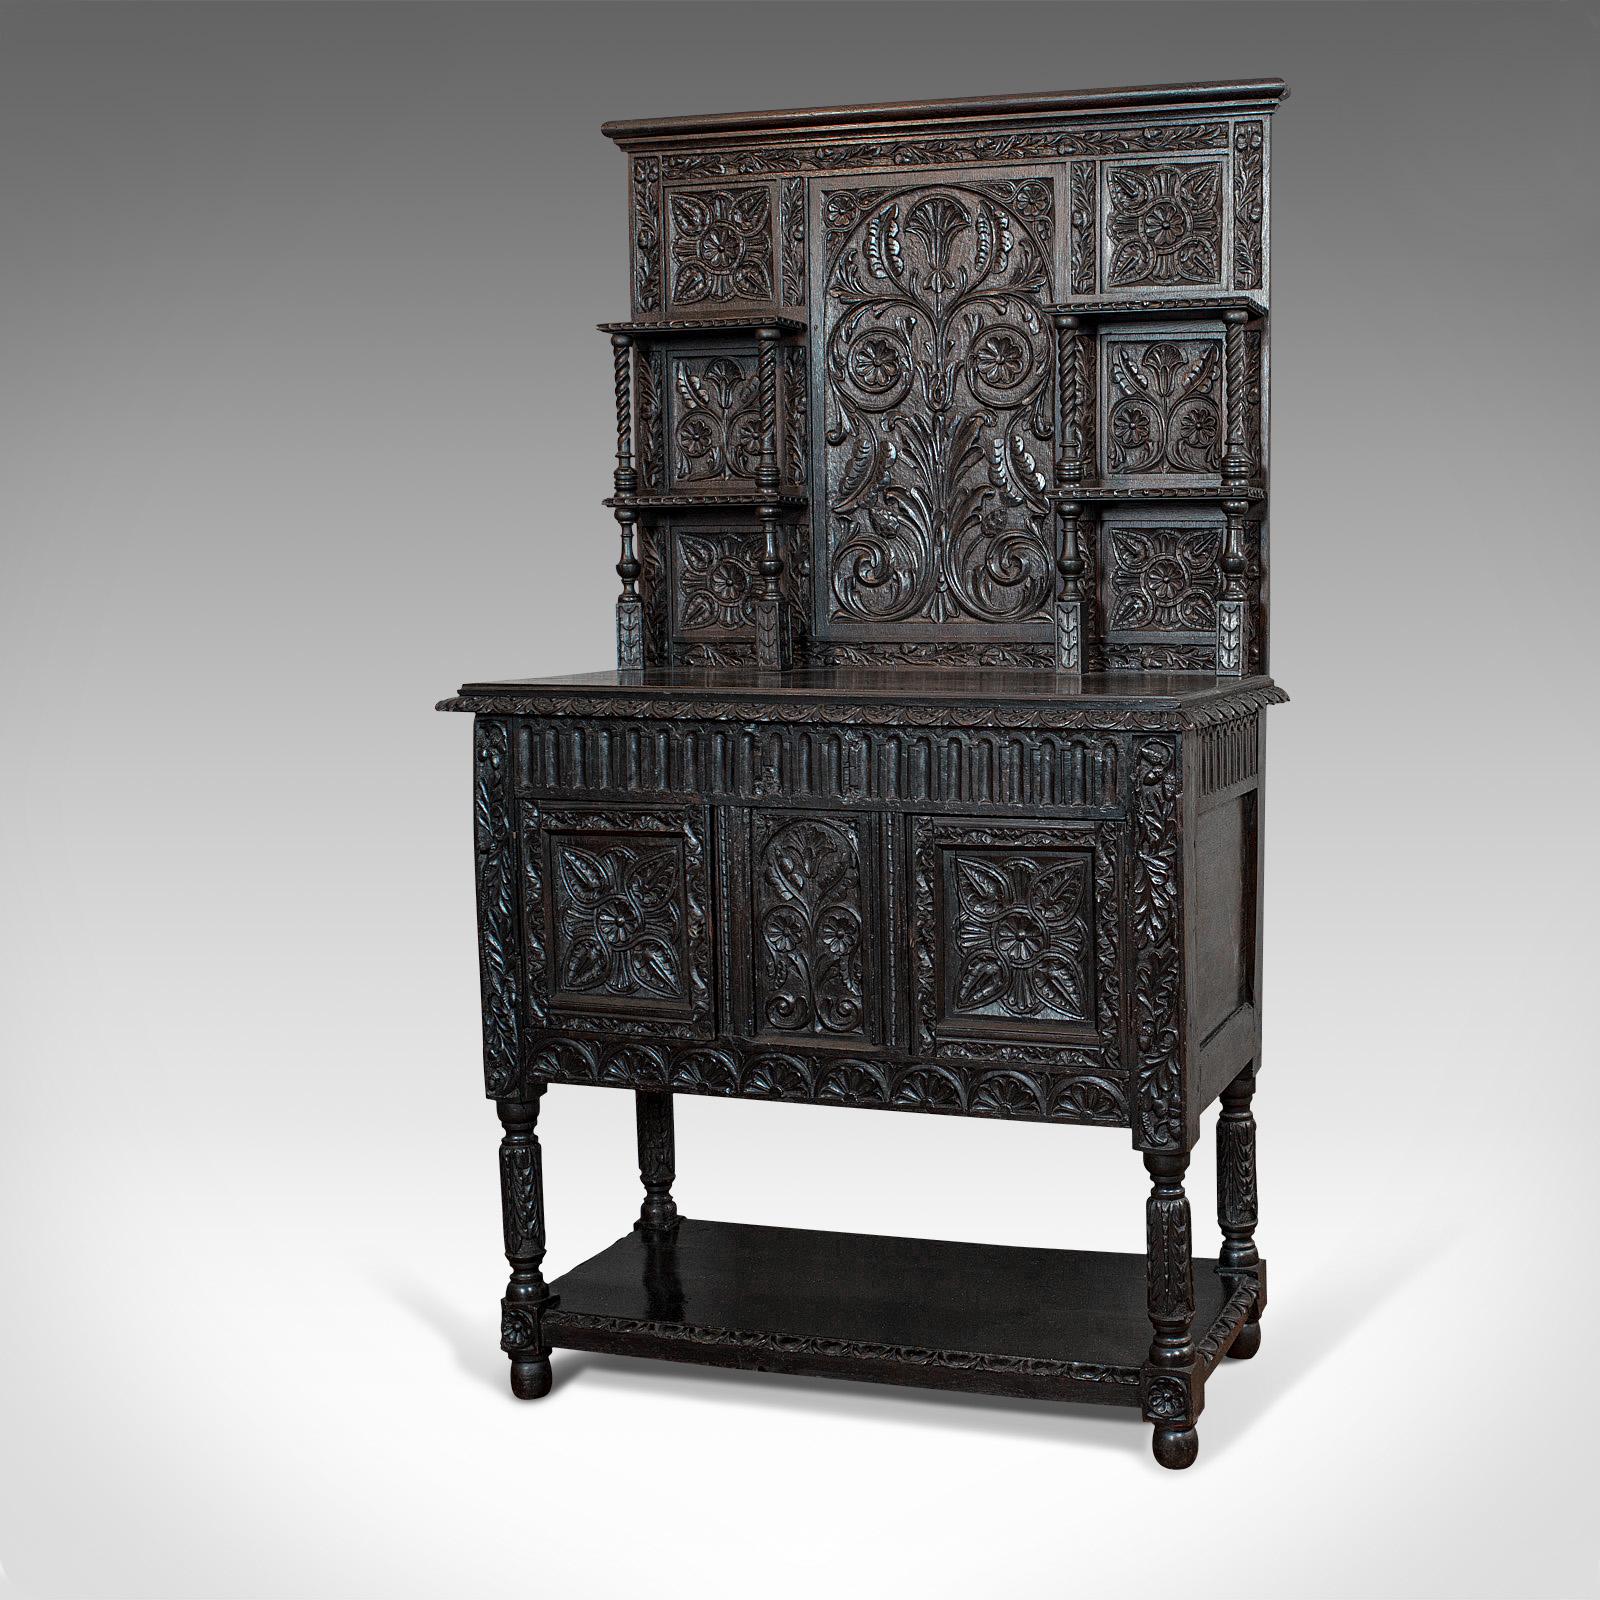 British Antique Charles II Revival Dresser English Oak, Sideboard, Victorian, circa 1880 For Sale